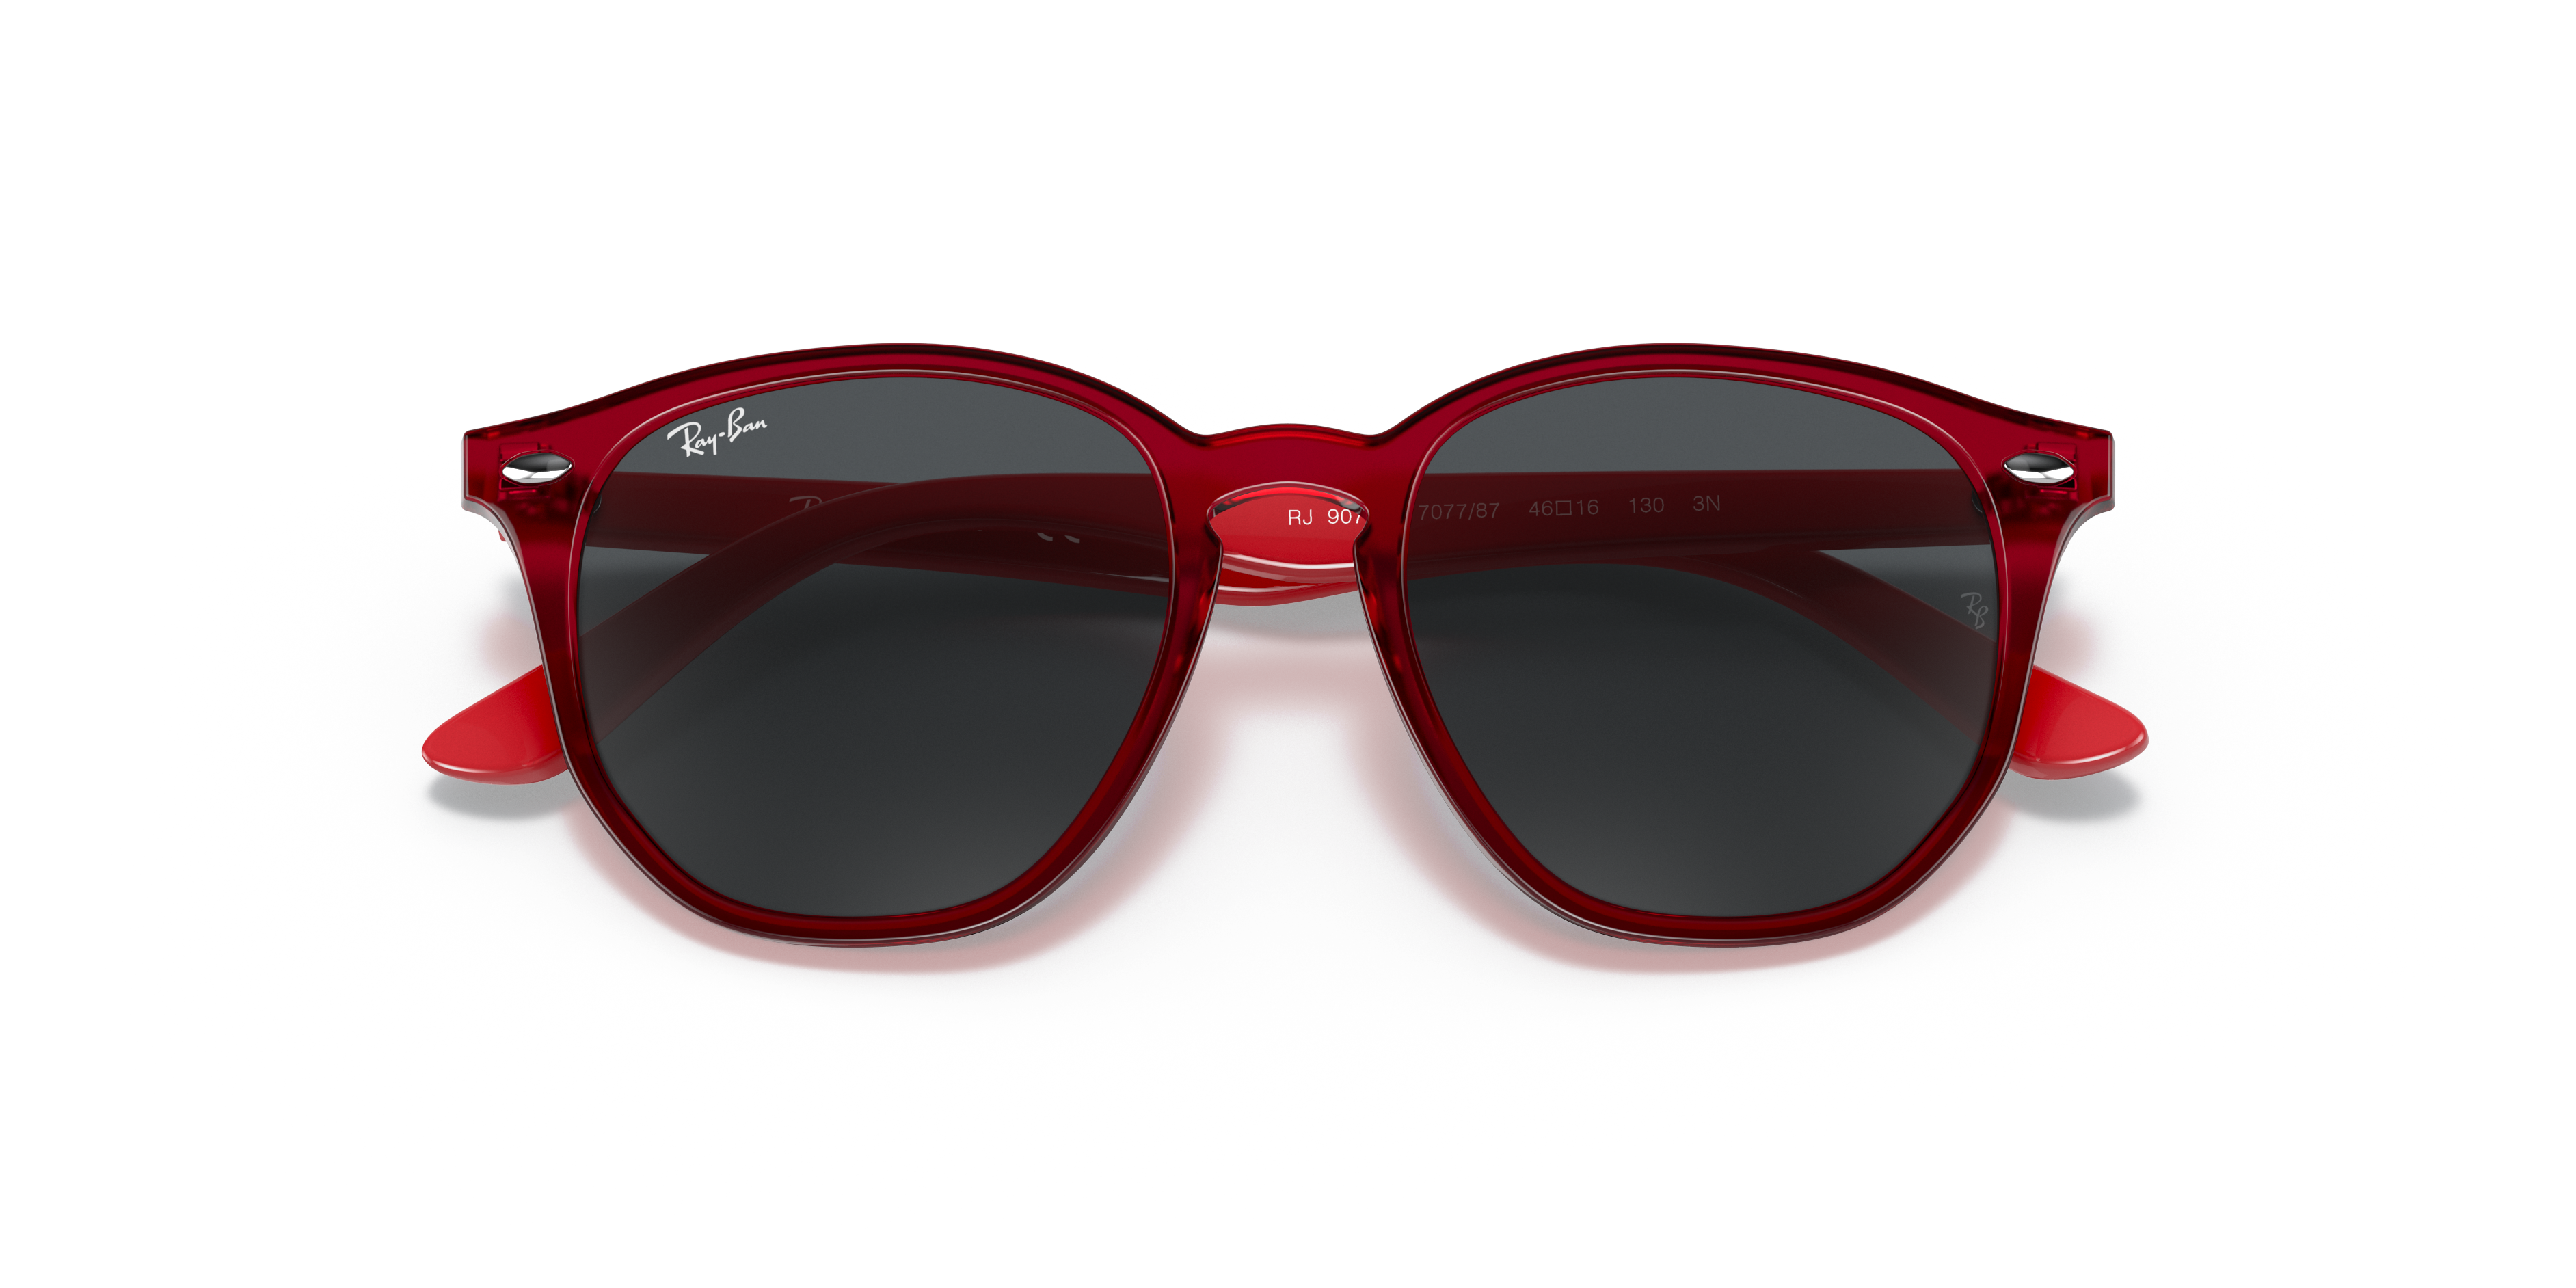 Ray-Ban Rb9070s Kids Sonnenbrillen Rot Fassung Silber Glas 46-16 in Rot Damen Accessoires Sonnenbrillen 